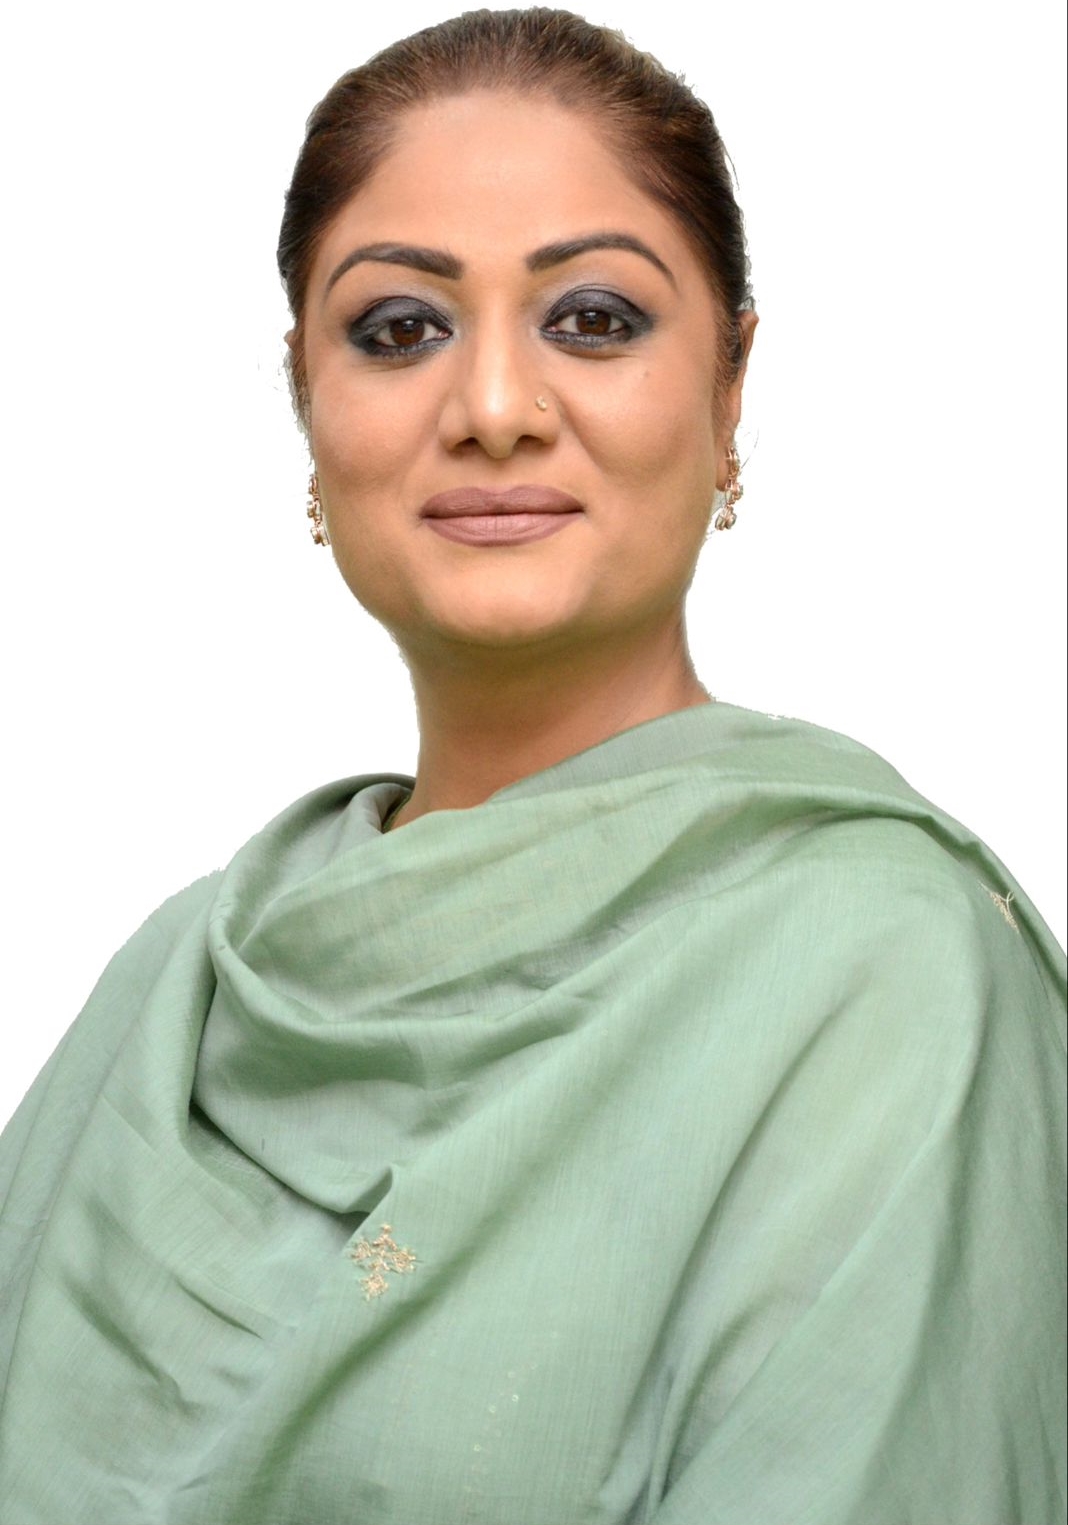 Dr. Hina Shafi Bhat